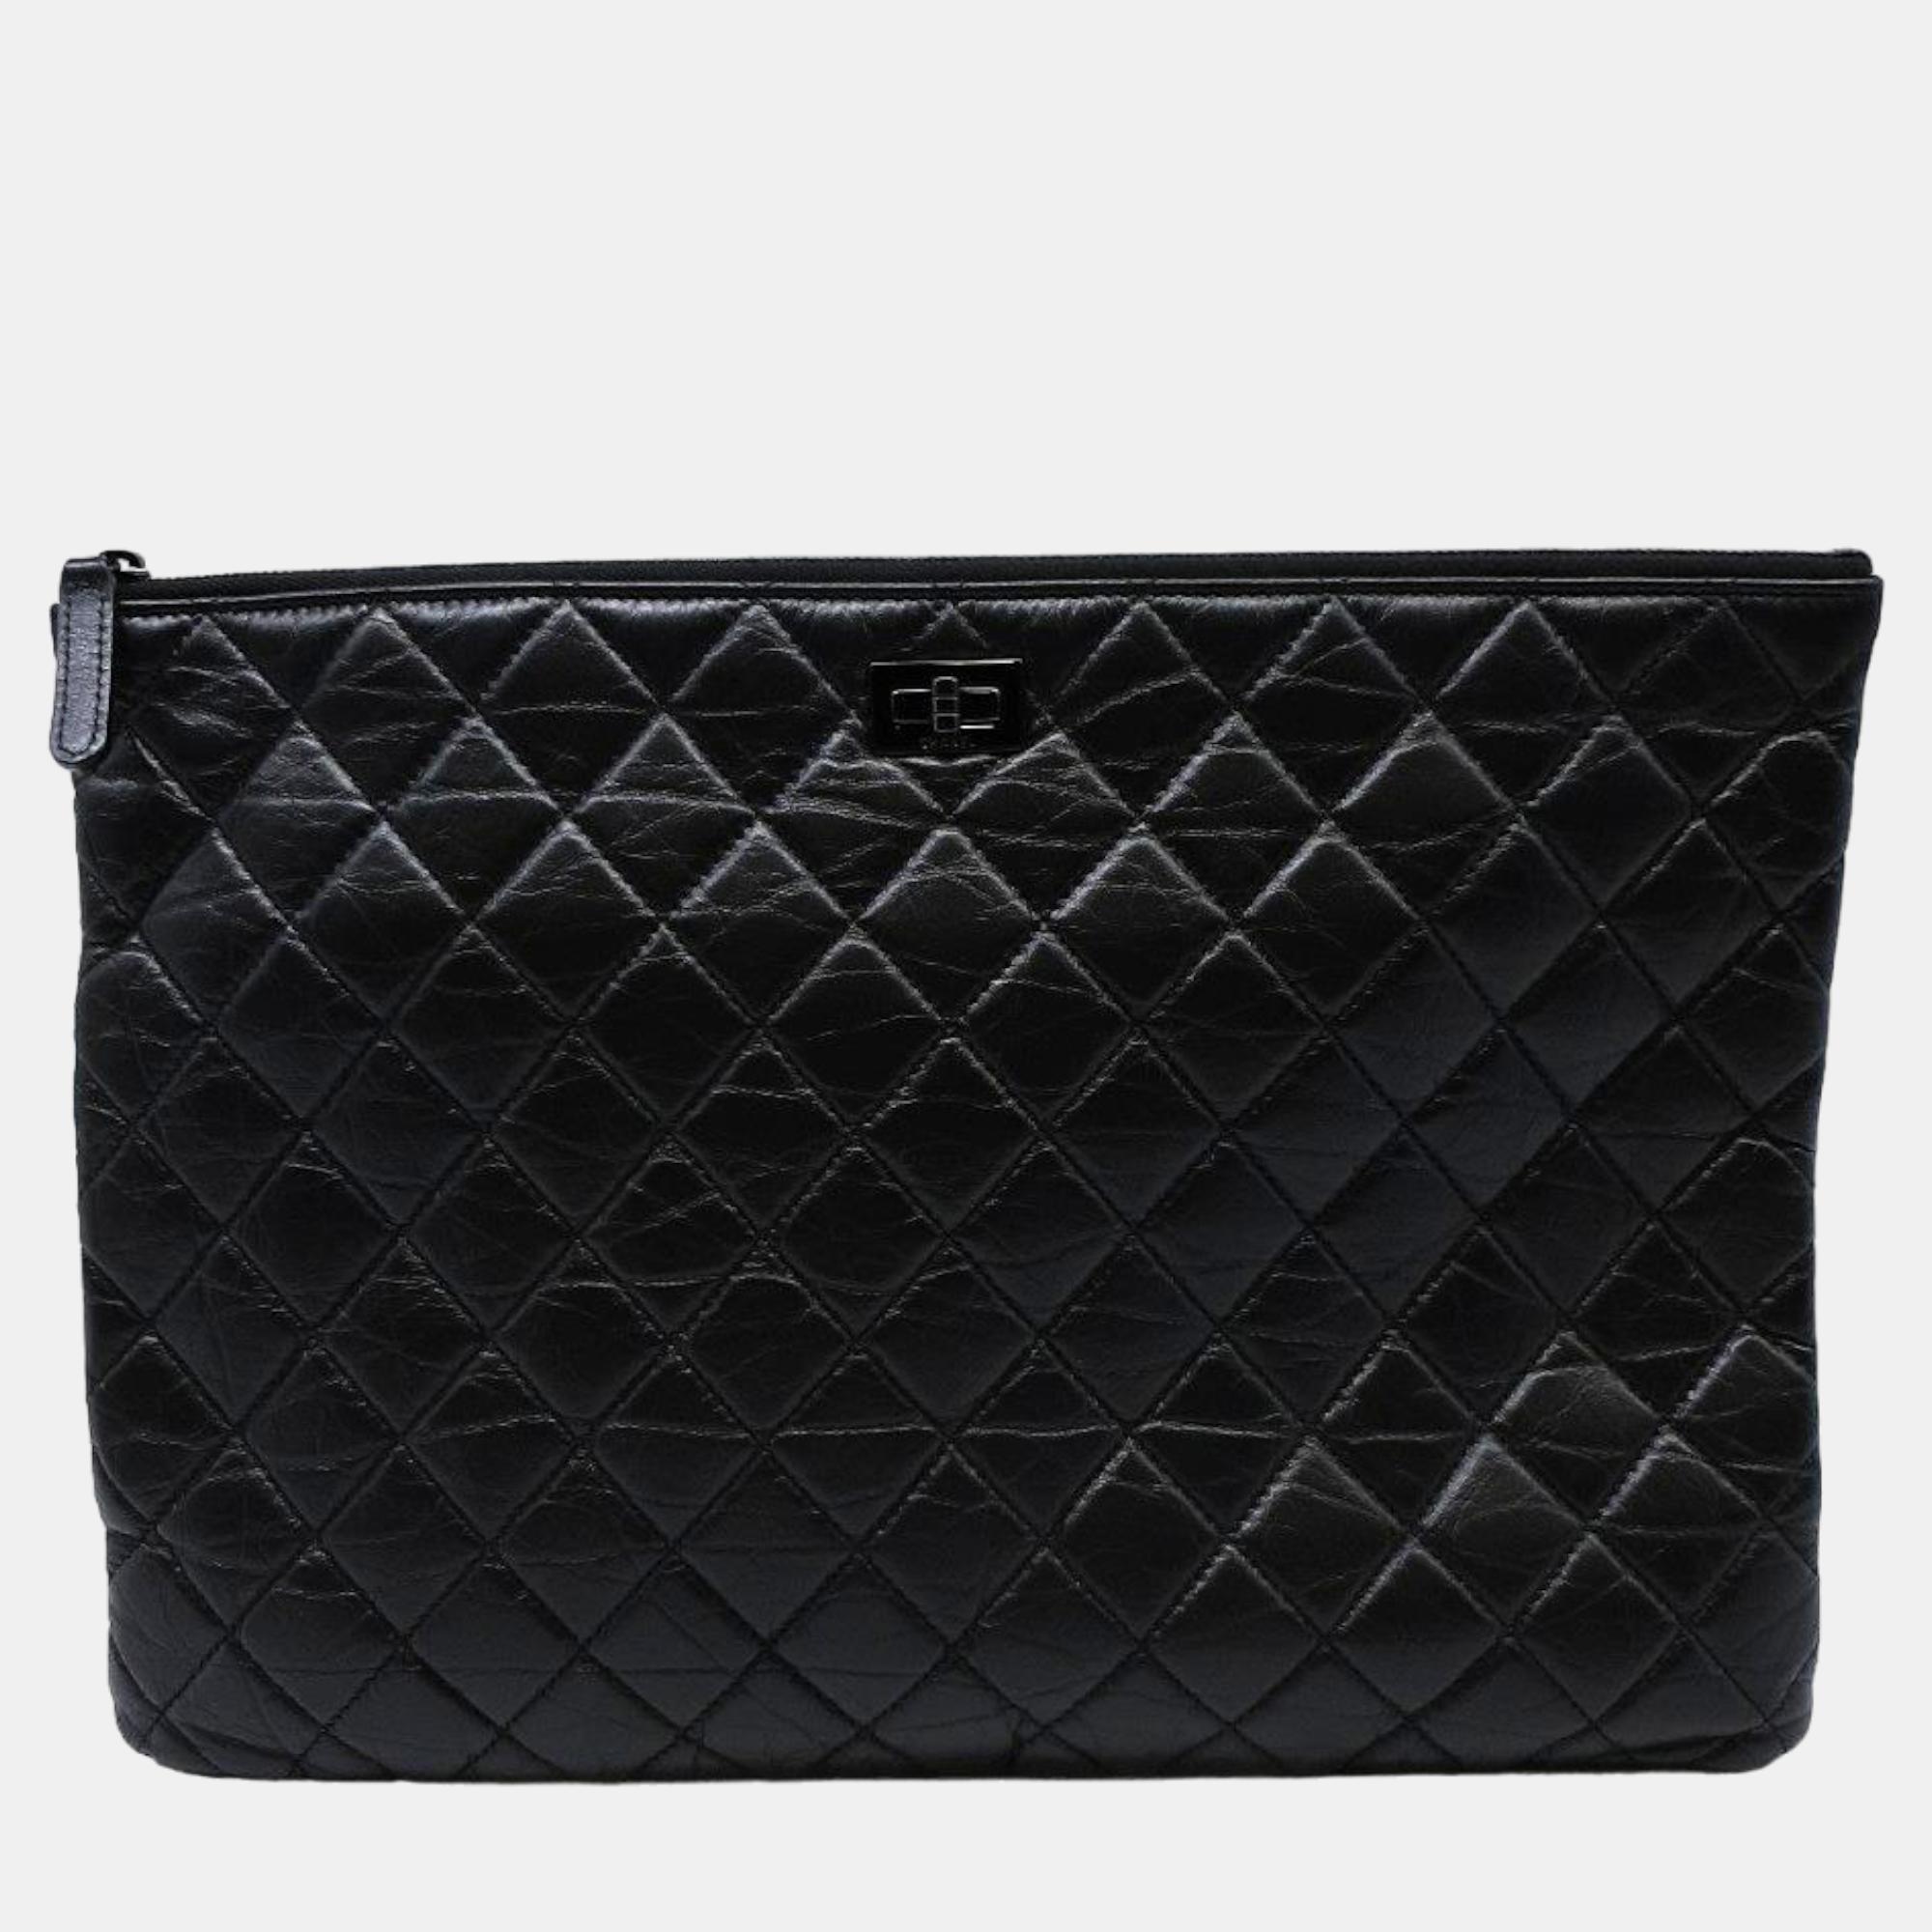 Chanel Black Leather CC Clutch